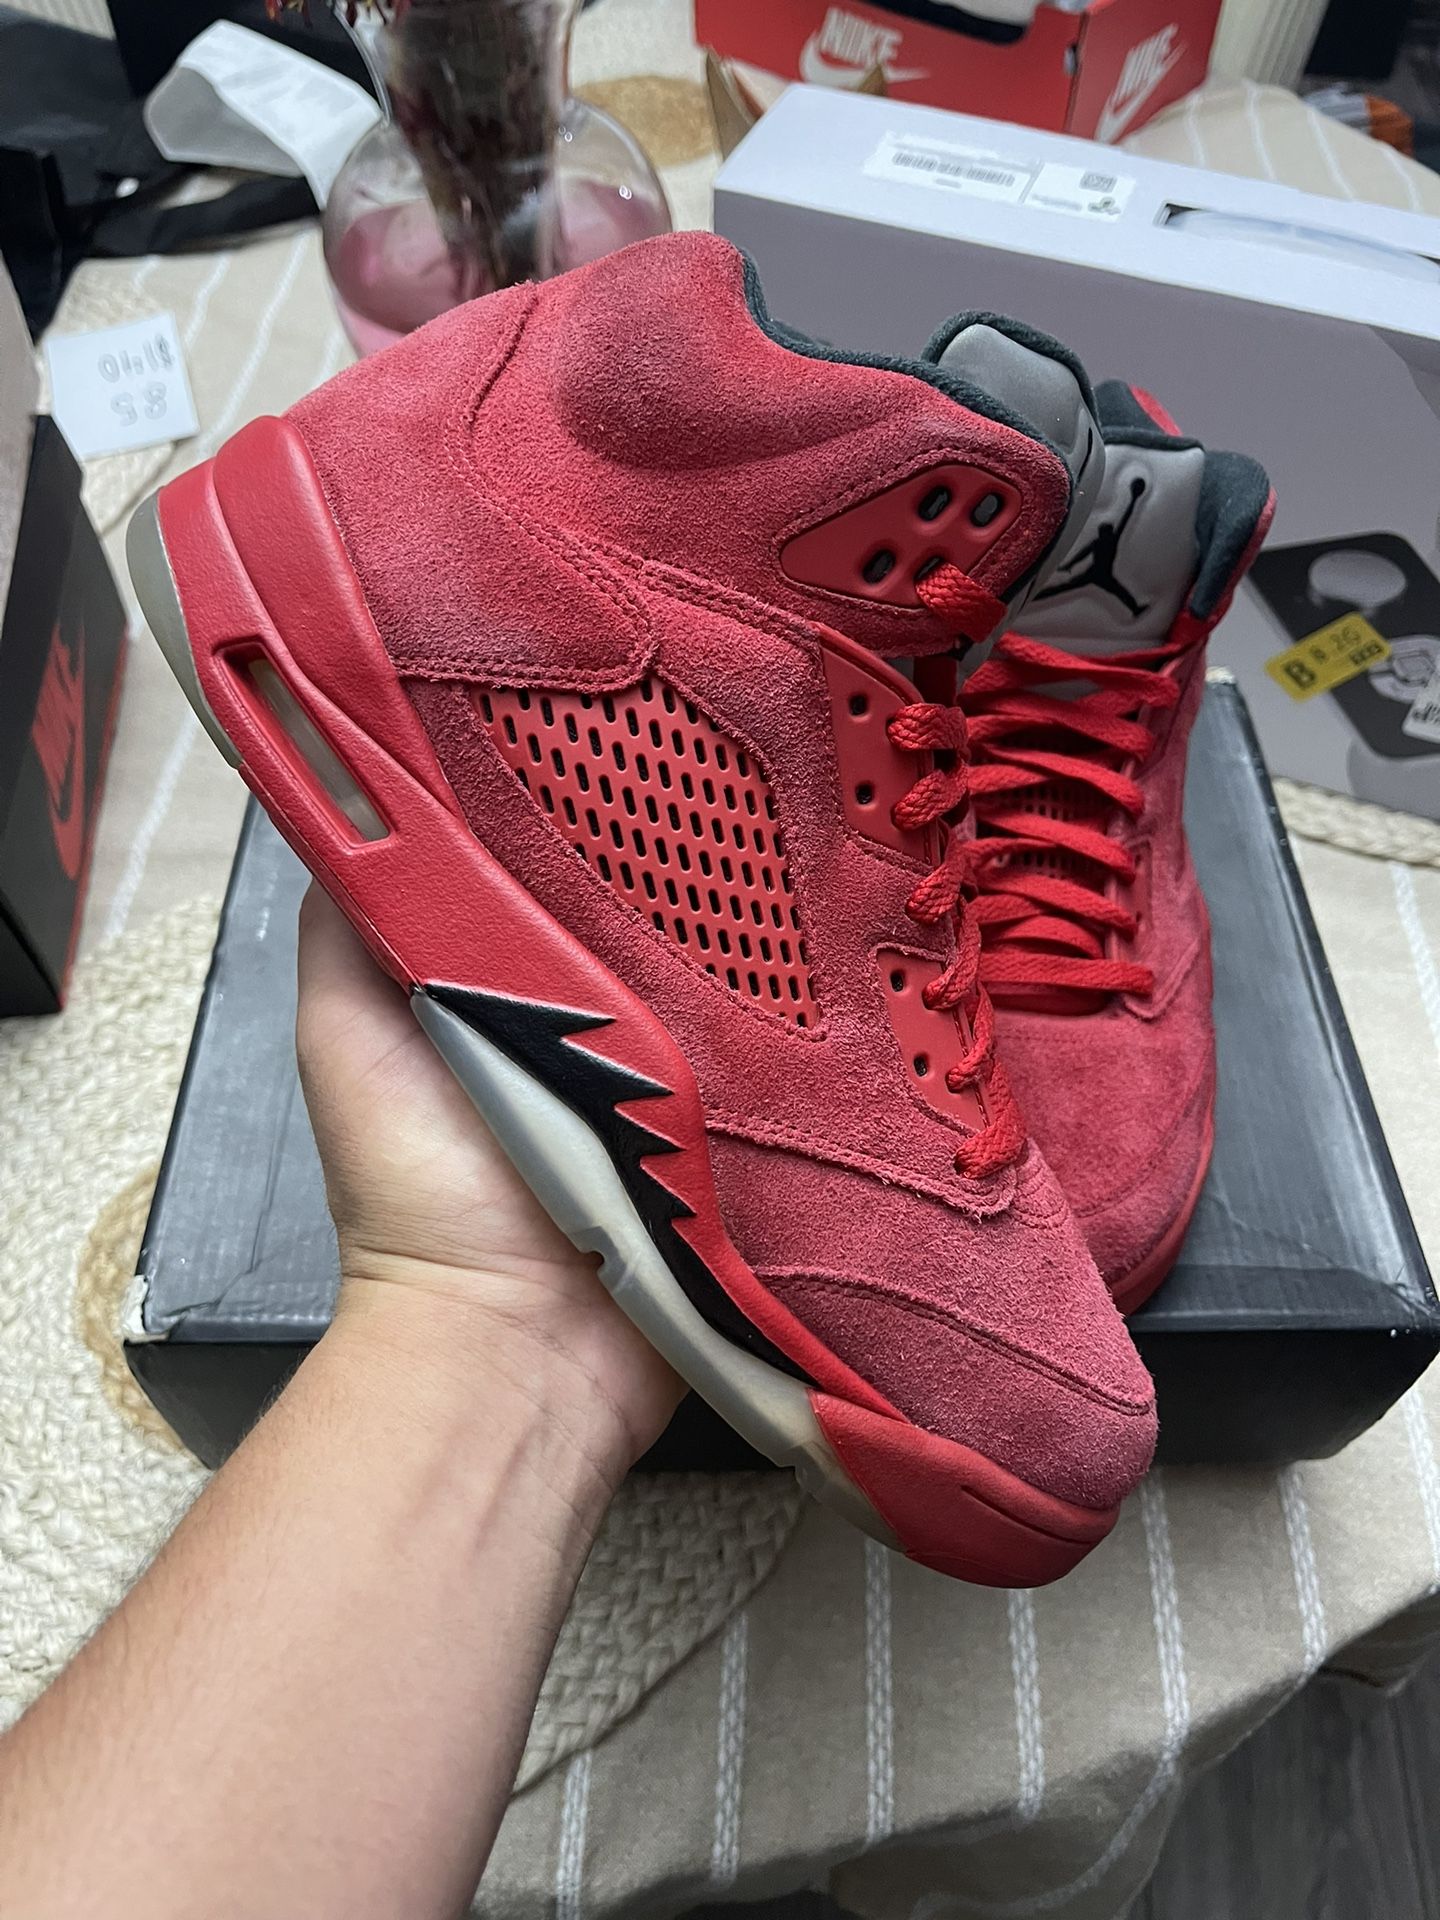 Jordan 5 “Red Suede” Size 8.5